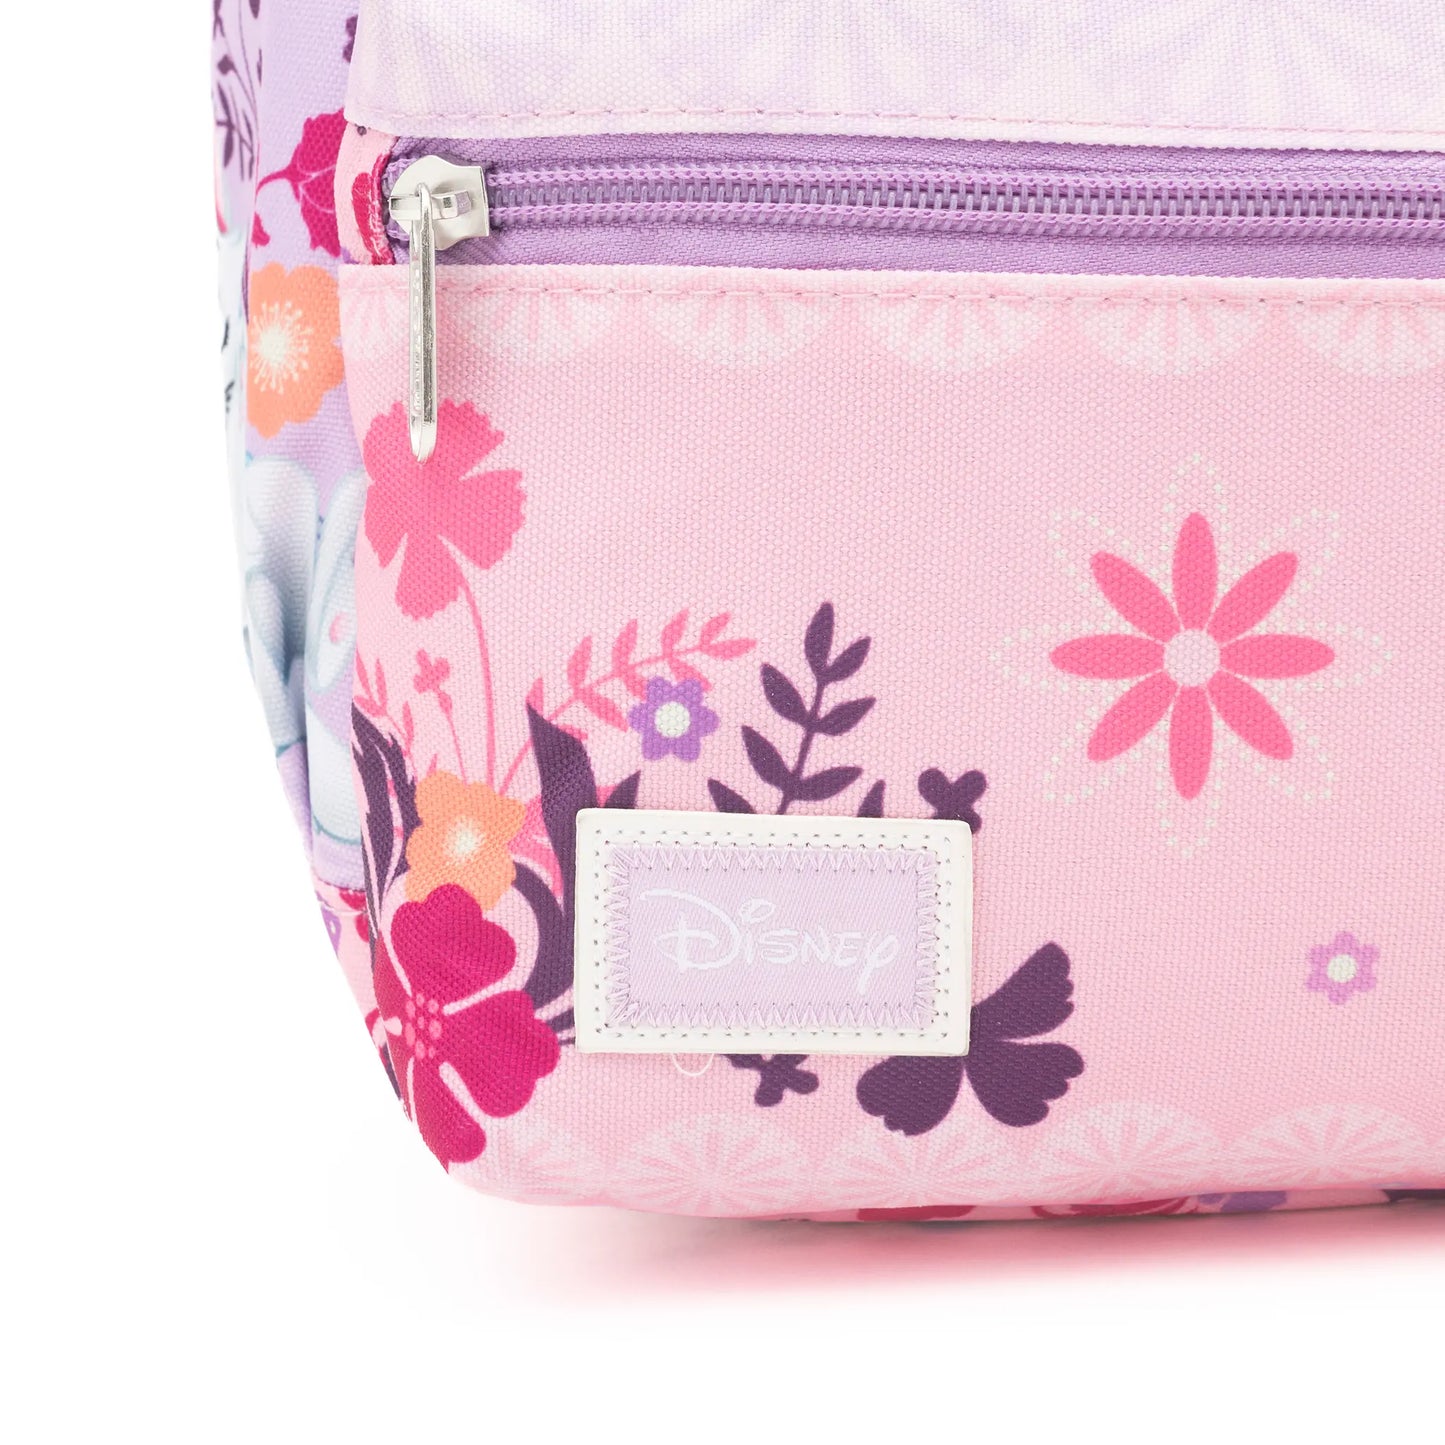 
                  
                    Disney Aristocats - Marie 13-inch Nylon Backpack
                  
                